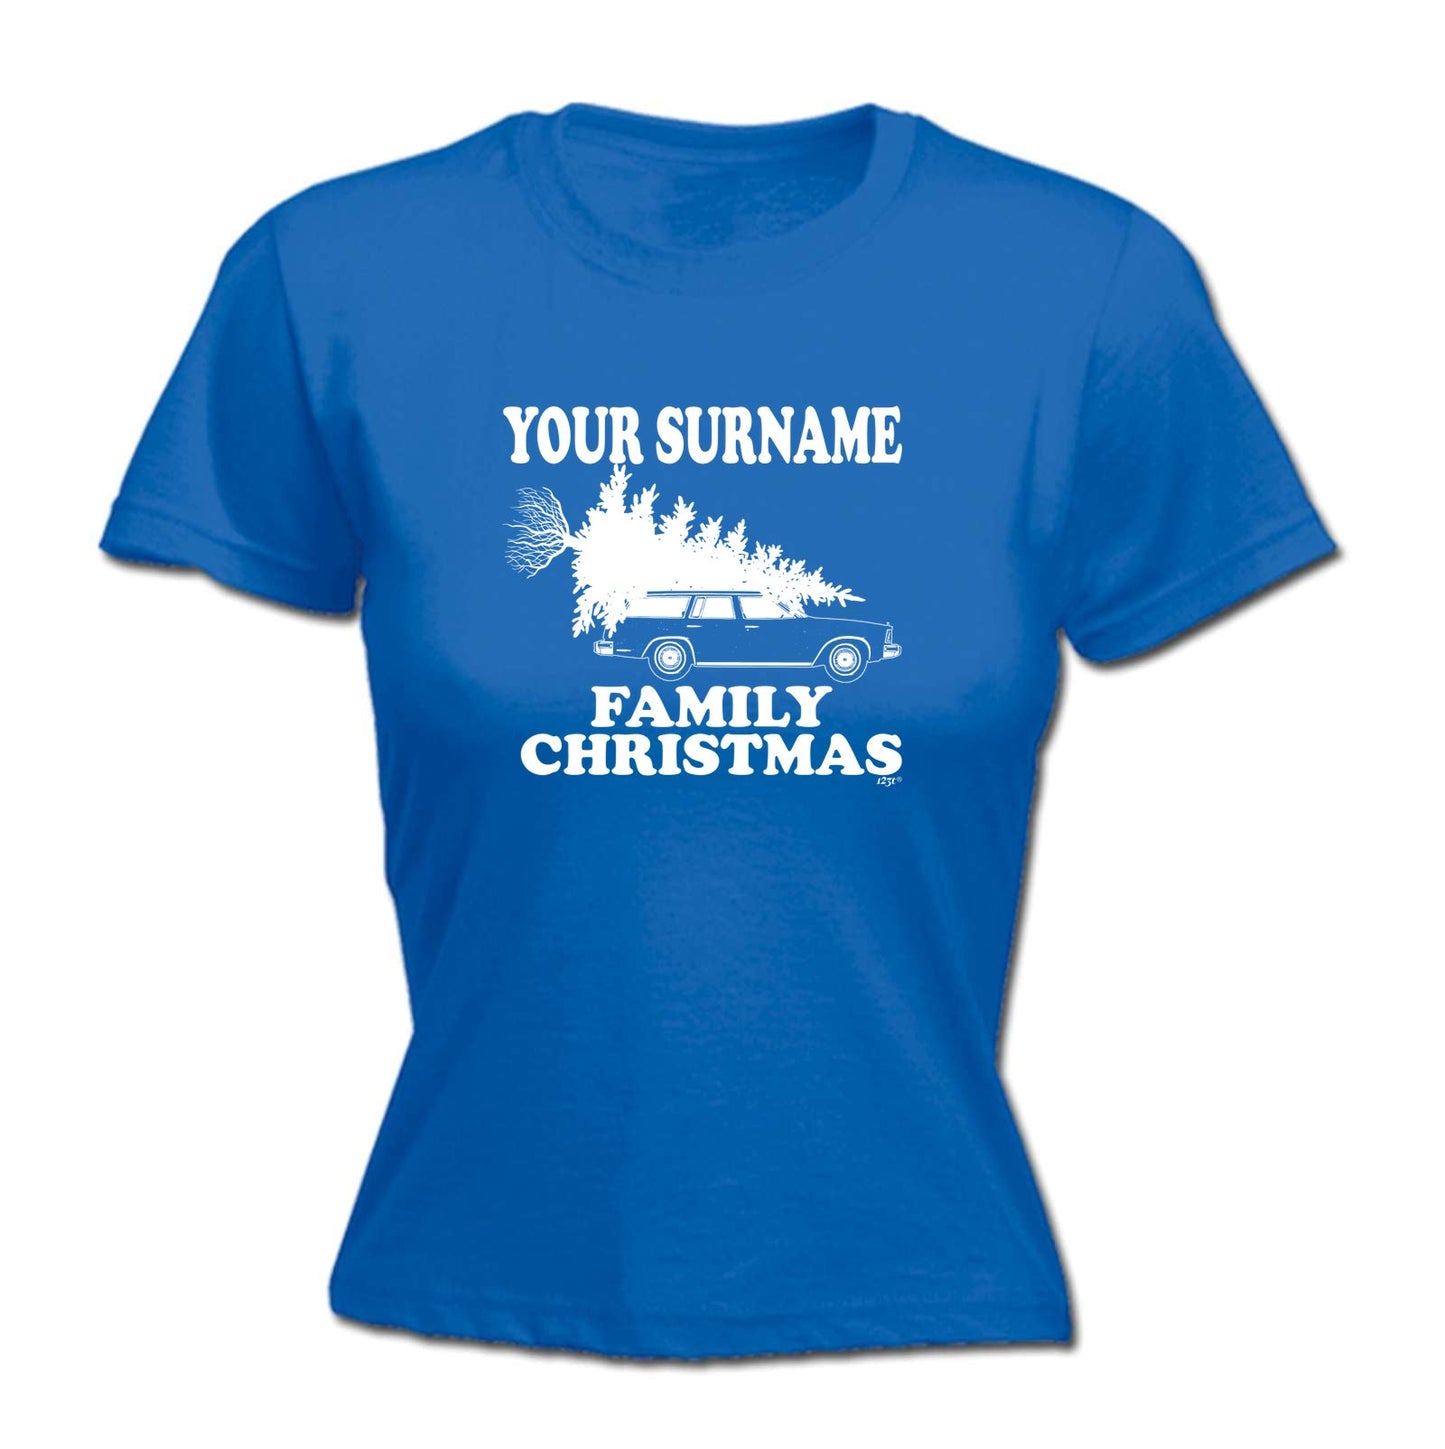 Family Christmas Your Surname Personalised - Xmas Novelty Womens T-Shirt Tshirt